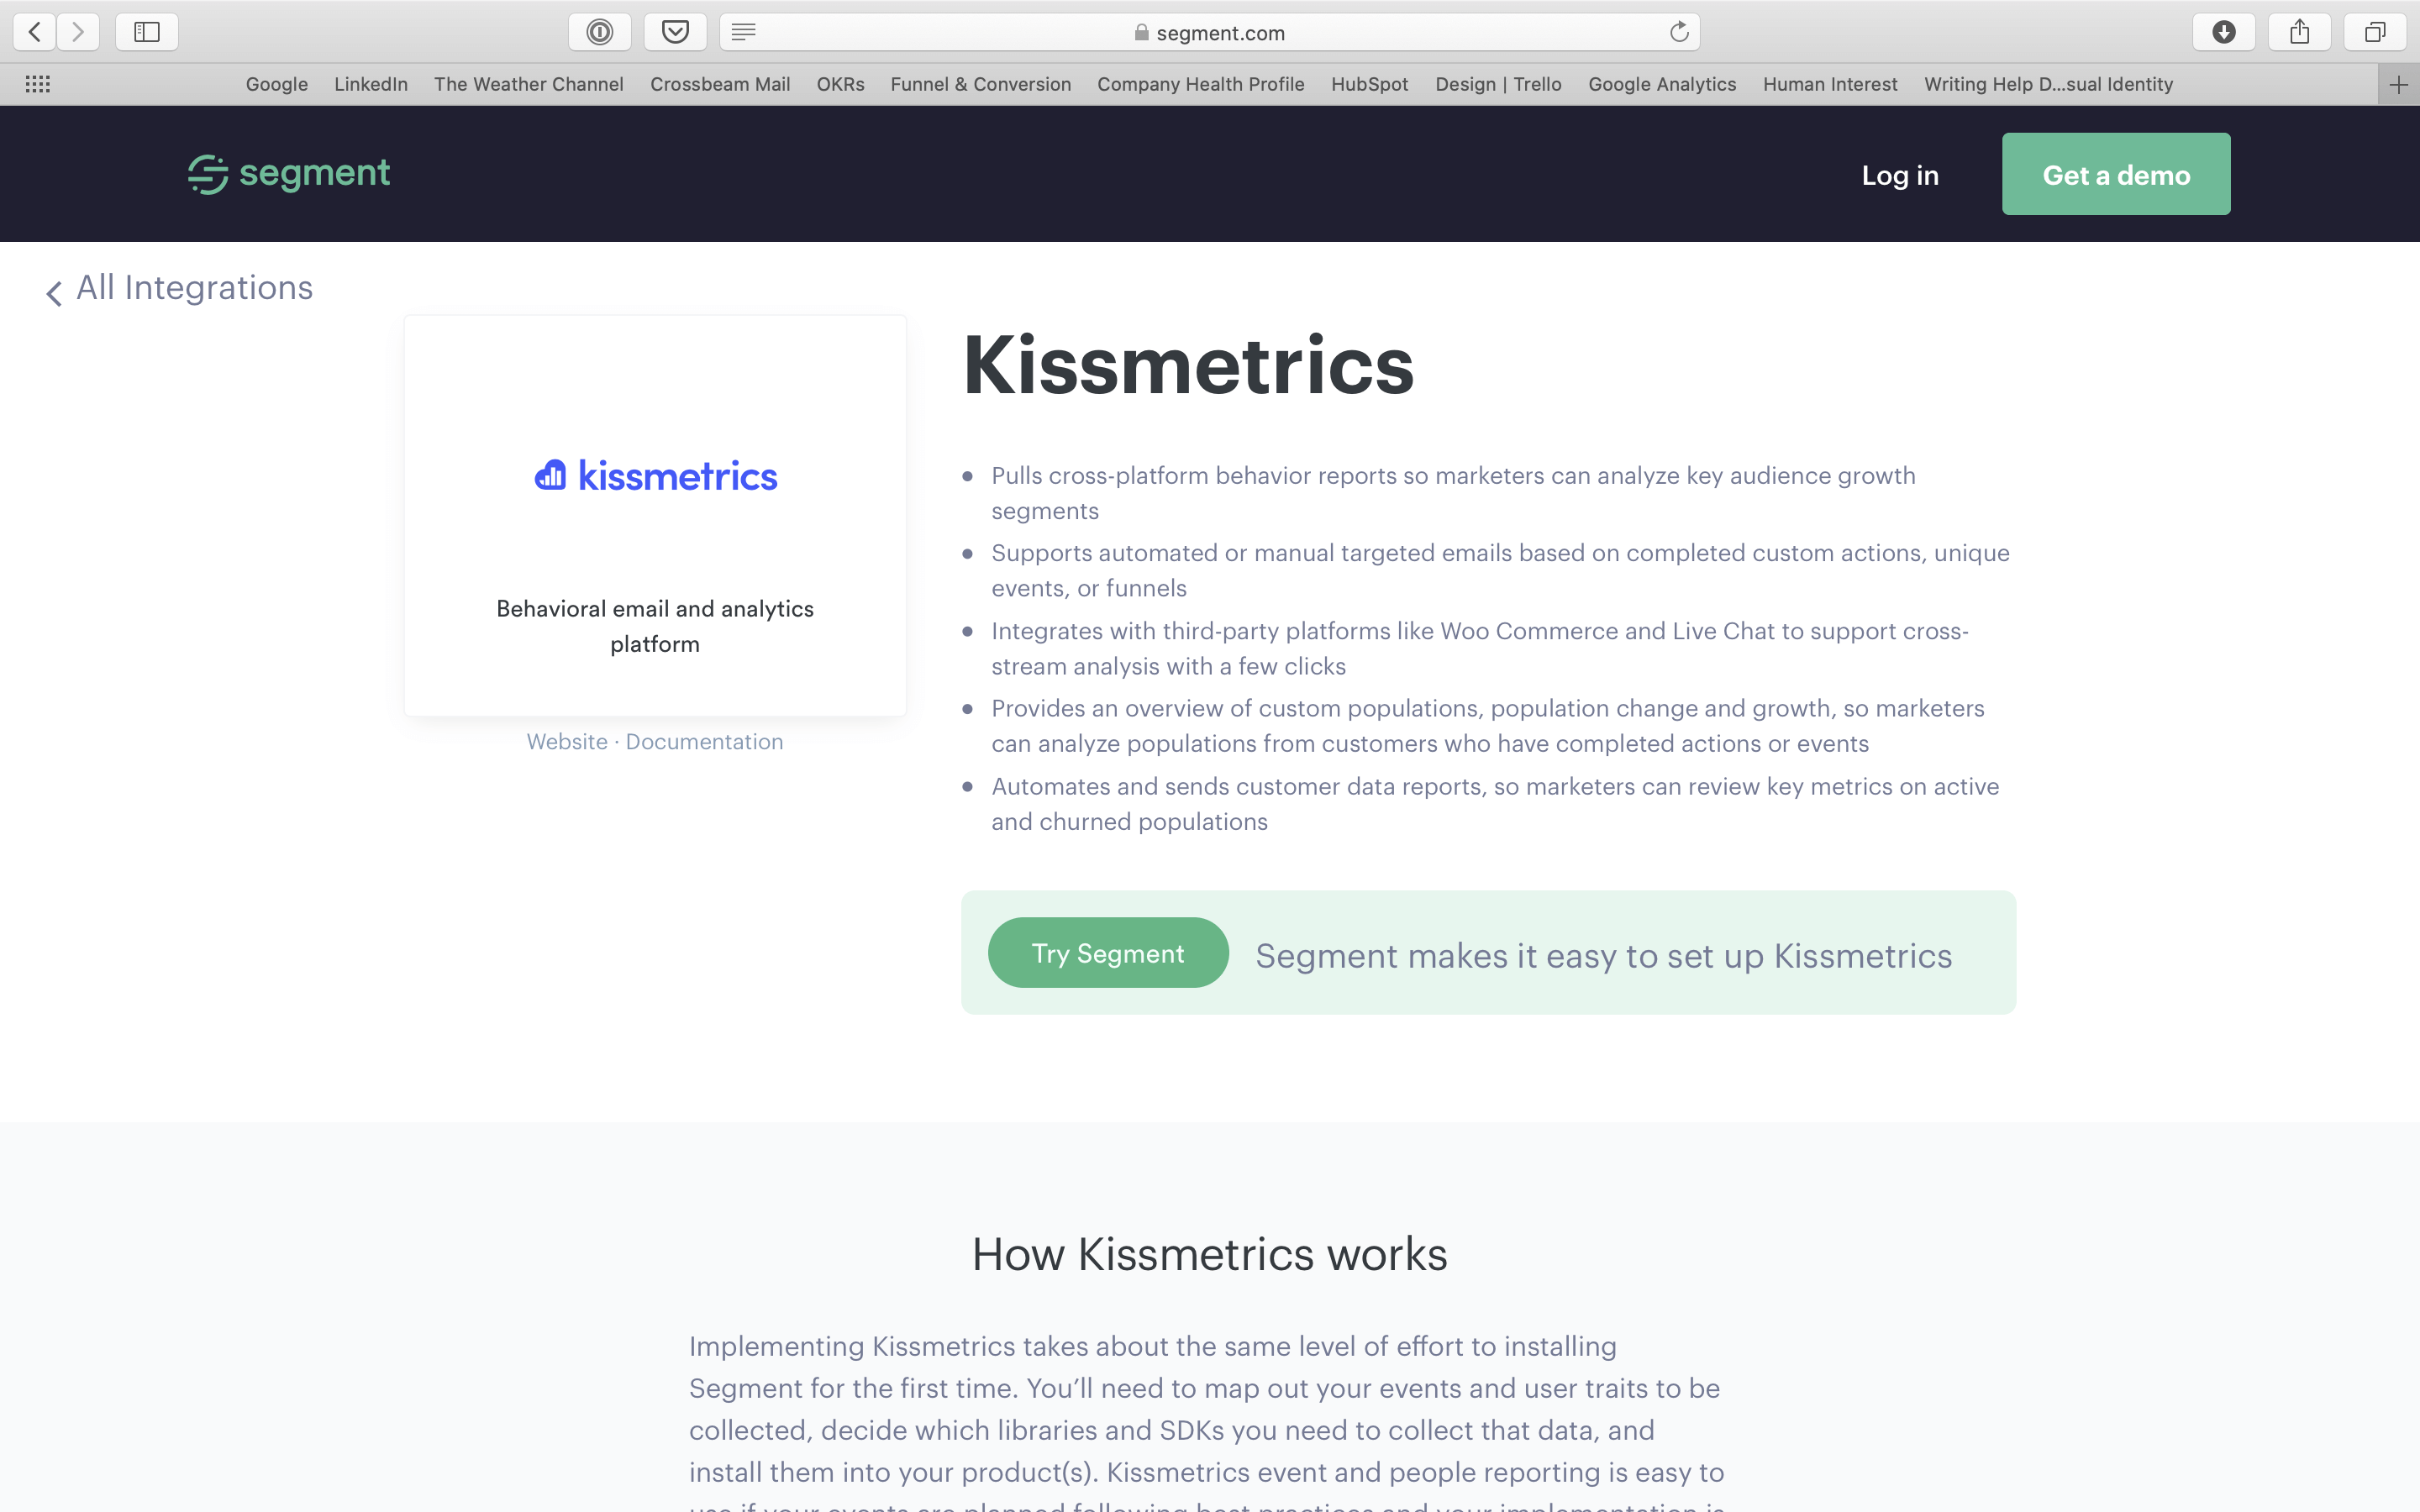 Segment Kissmetrics partner page